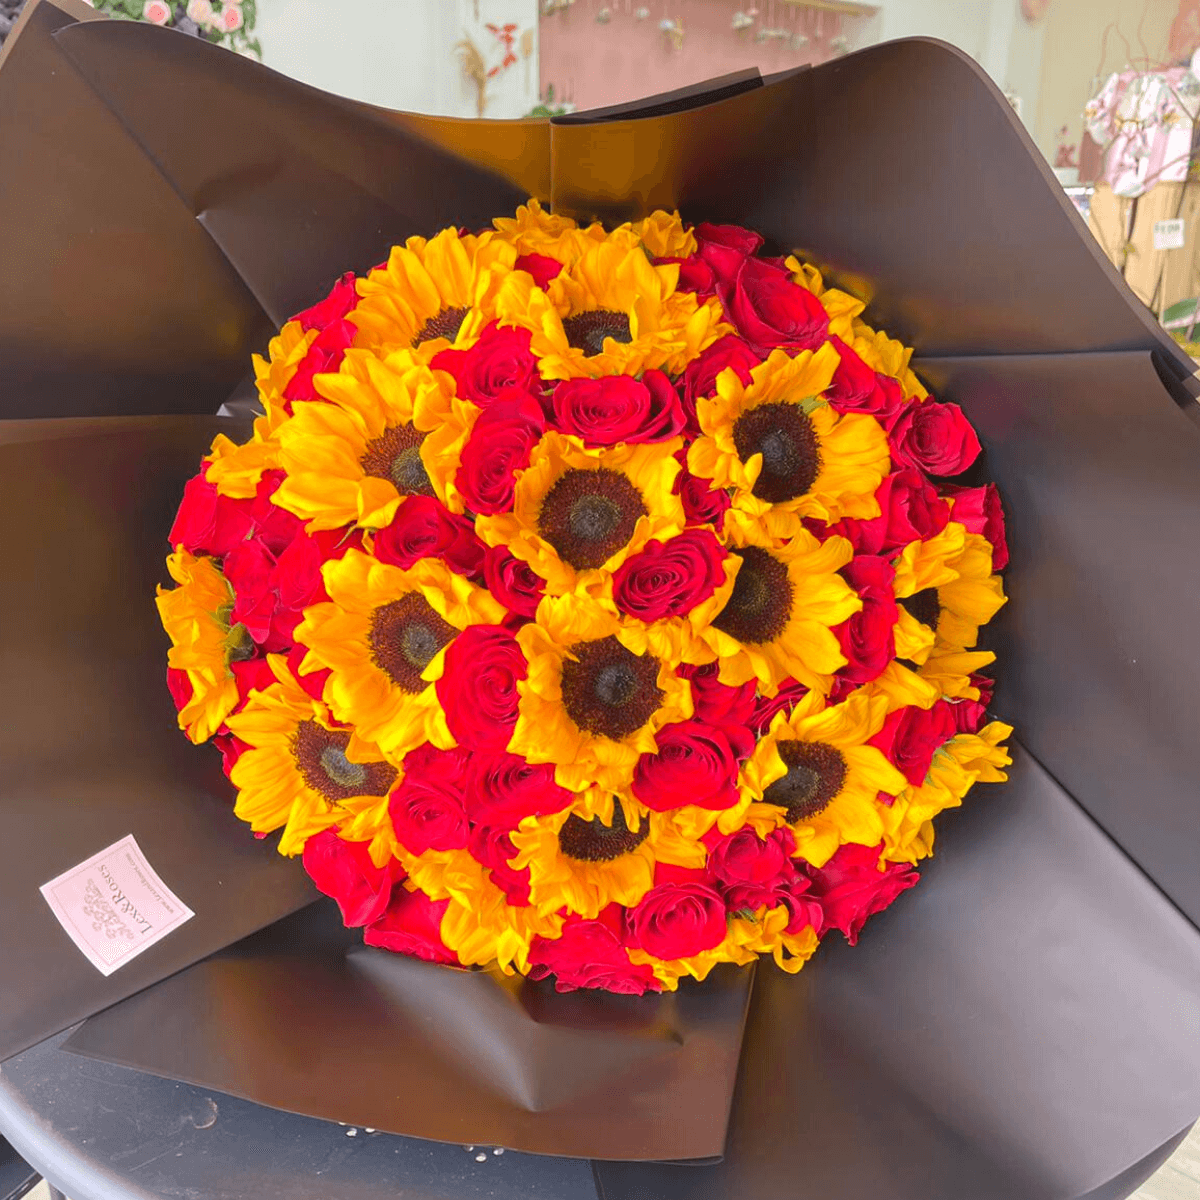 MFS 100 Rose Bouquet (Multicolored) in Maywood, CA